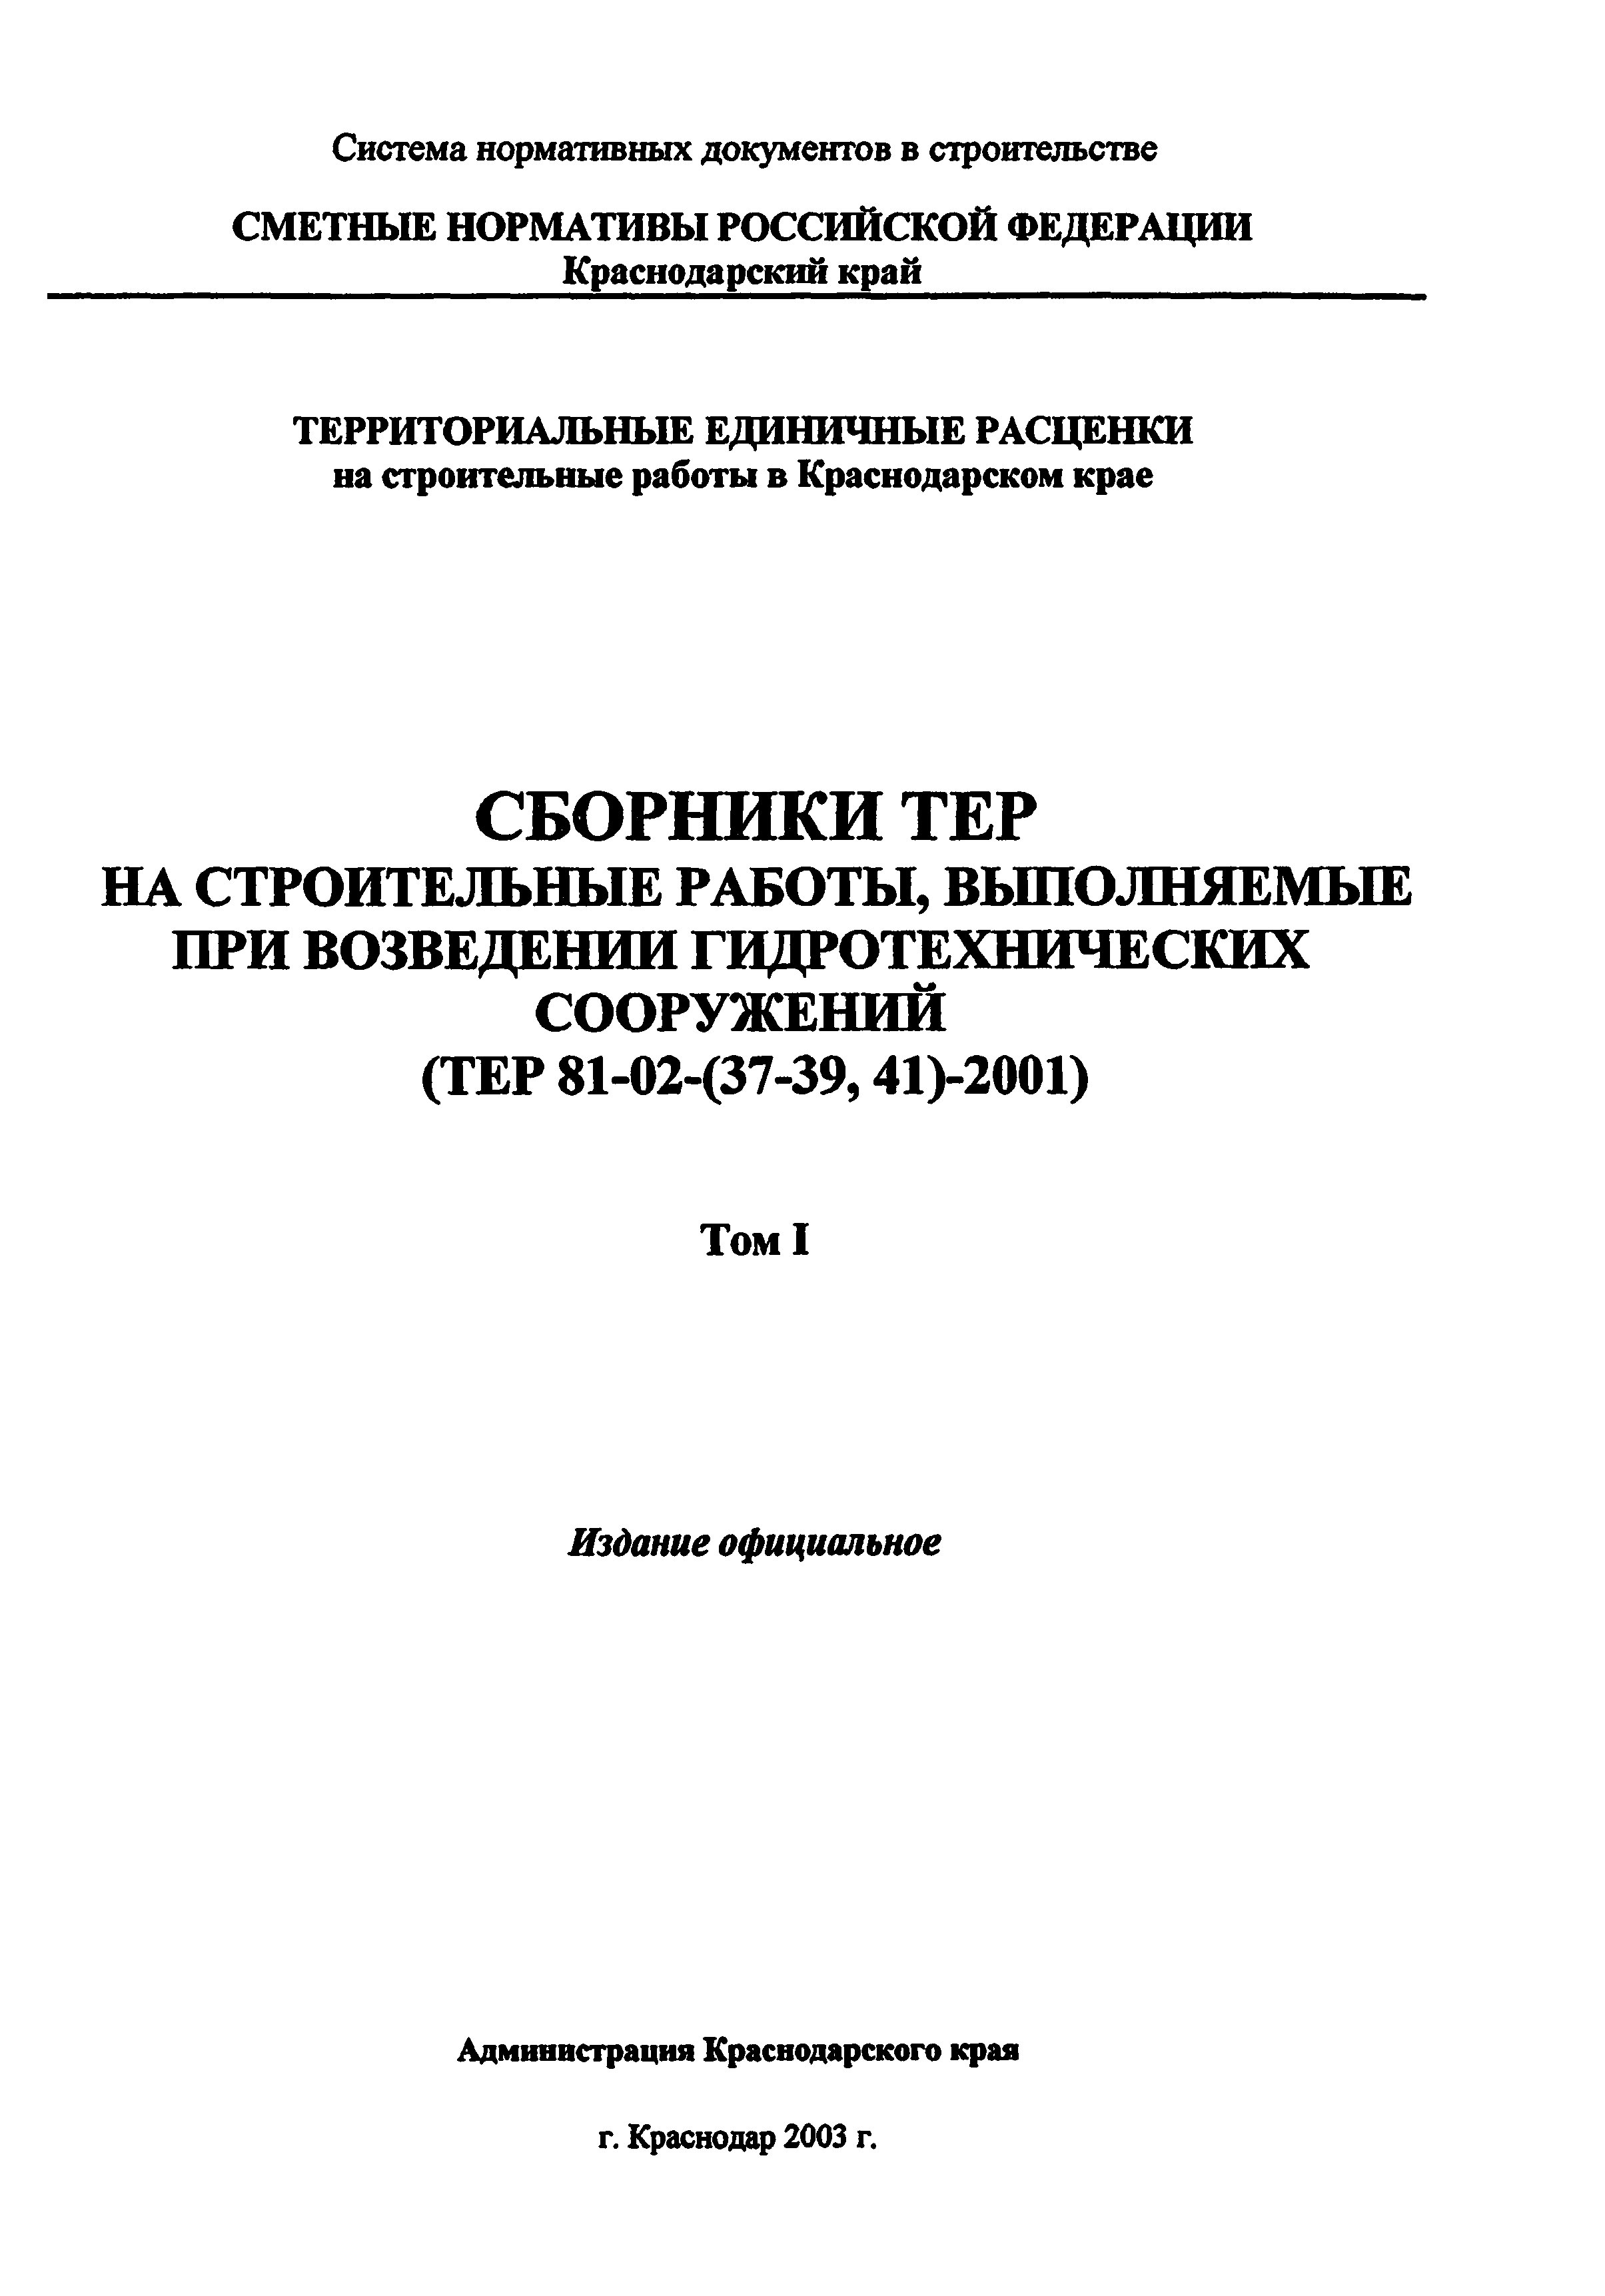 ТЕР Краснодарского края 2001-38